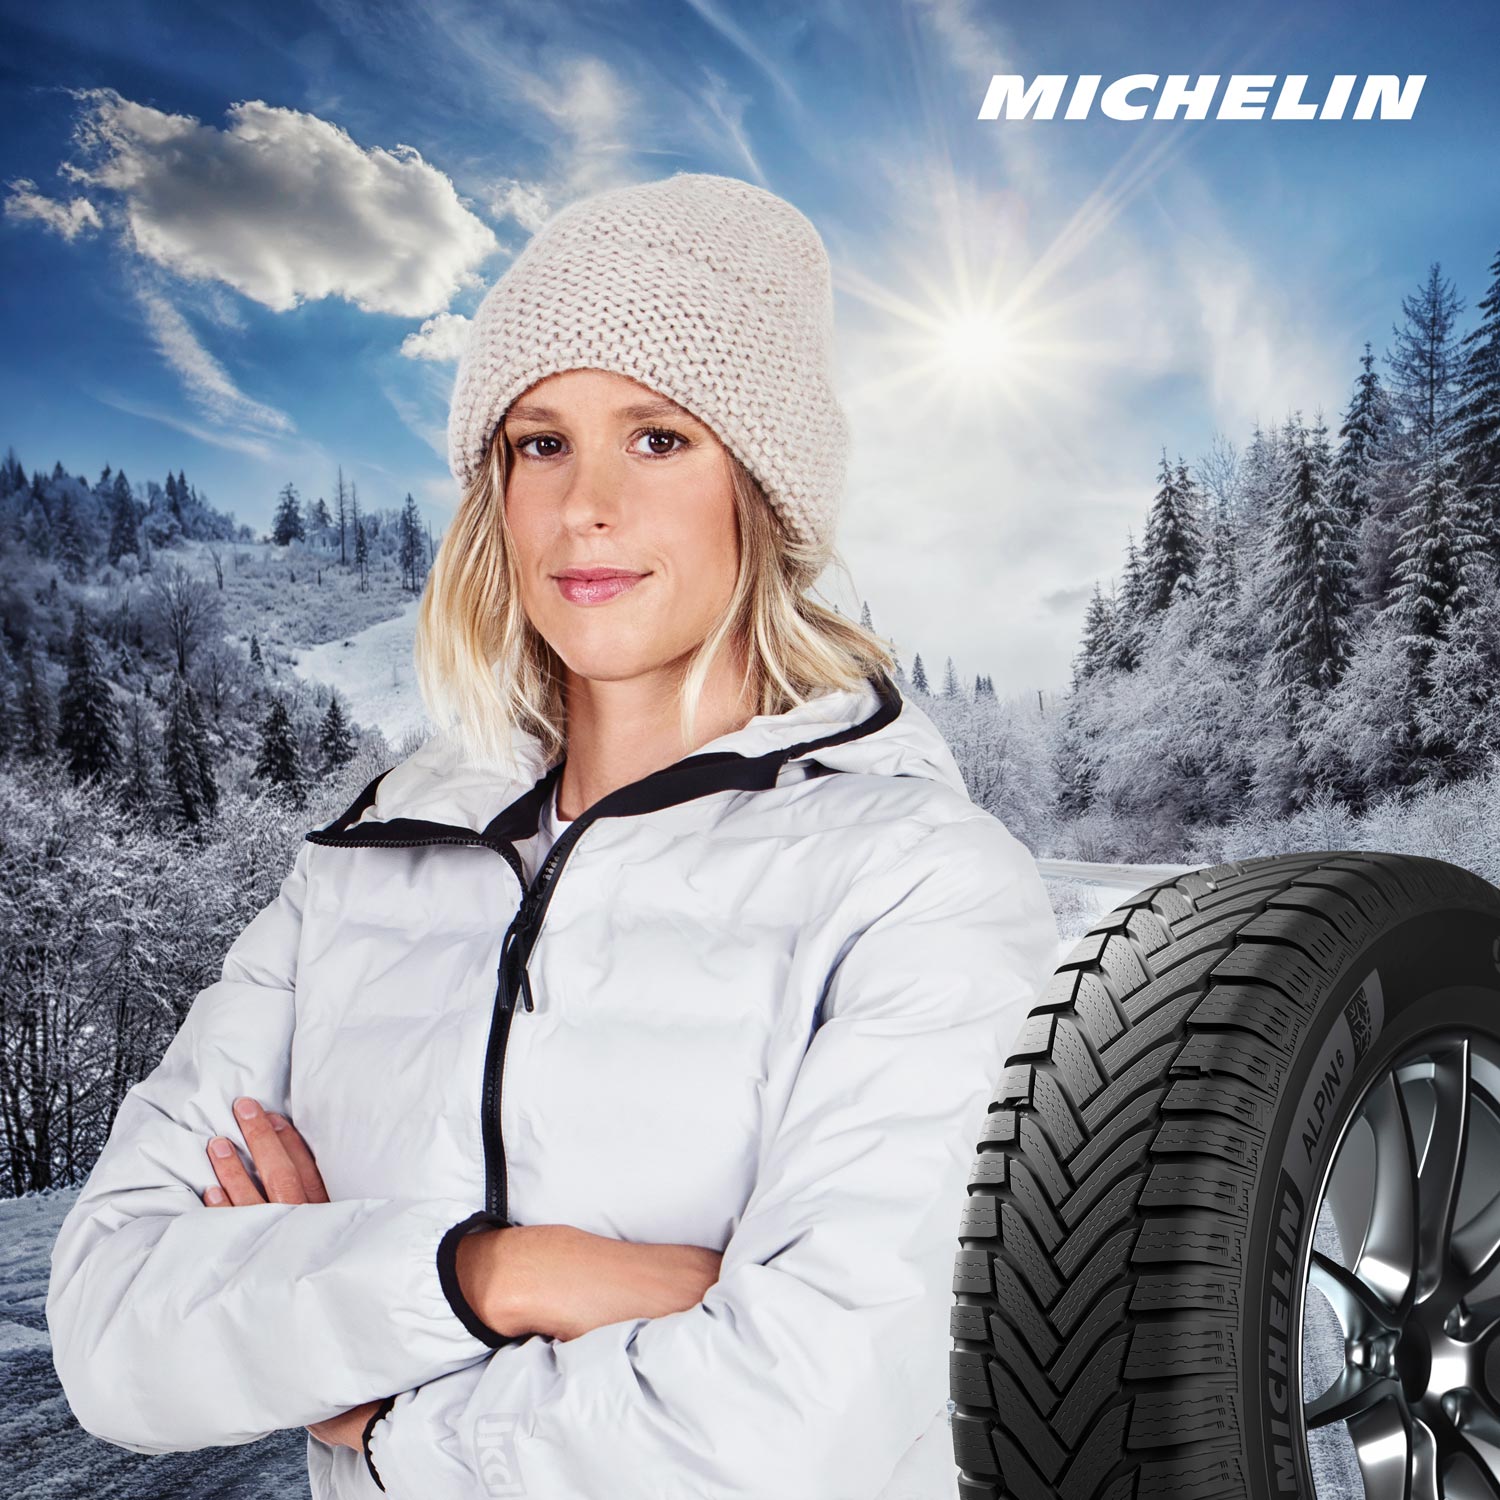 Federica Pellegrini is Michelin ambassador